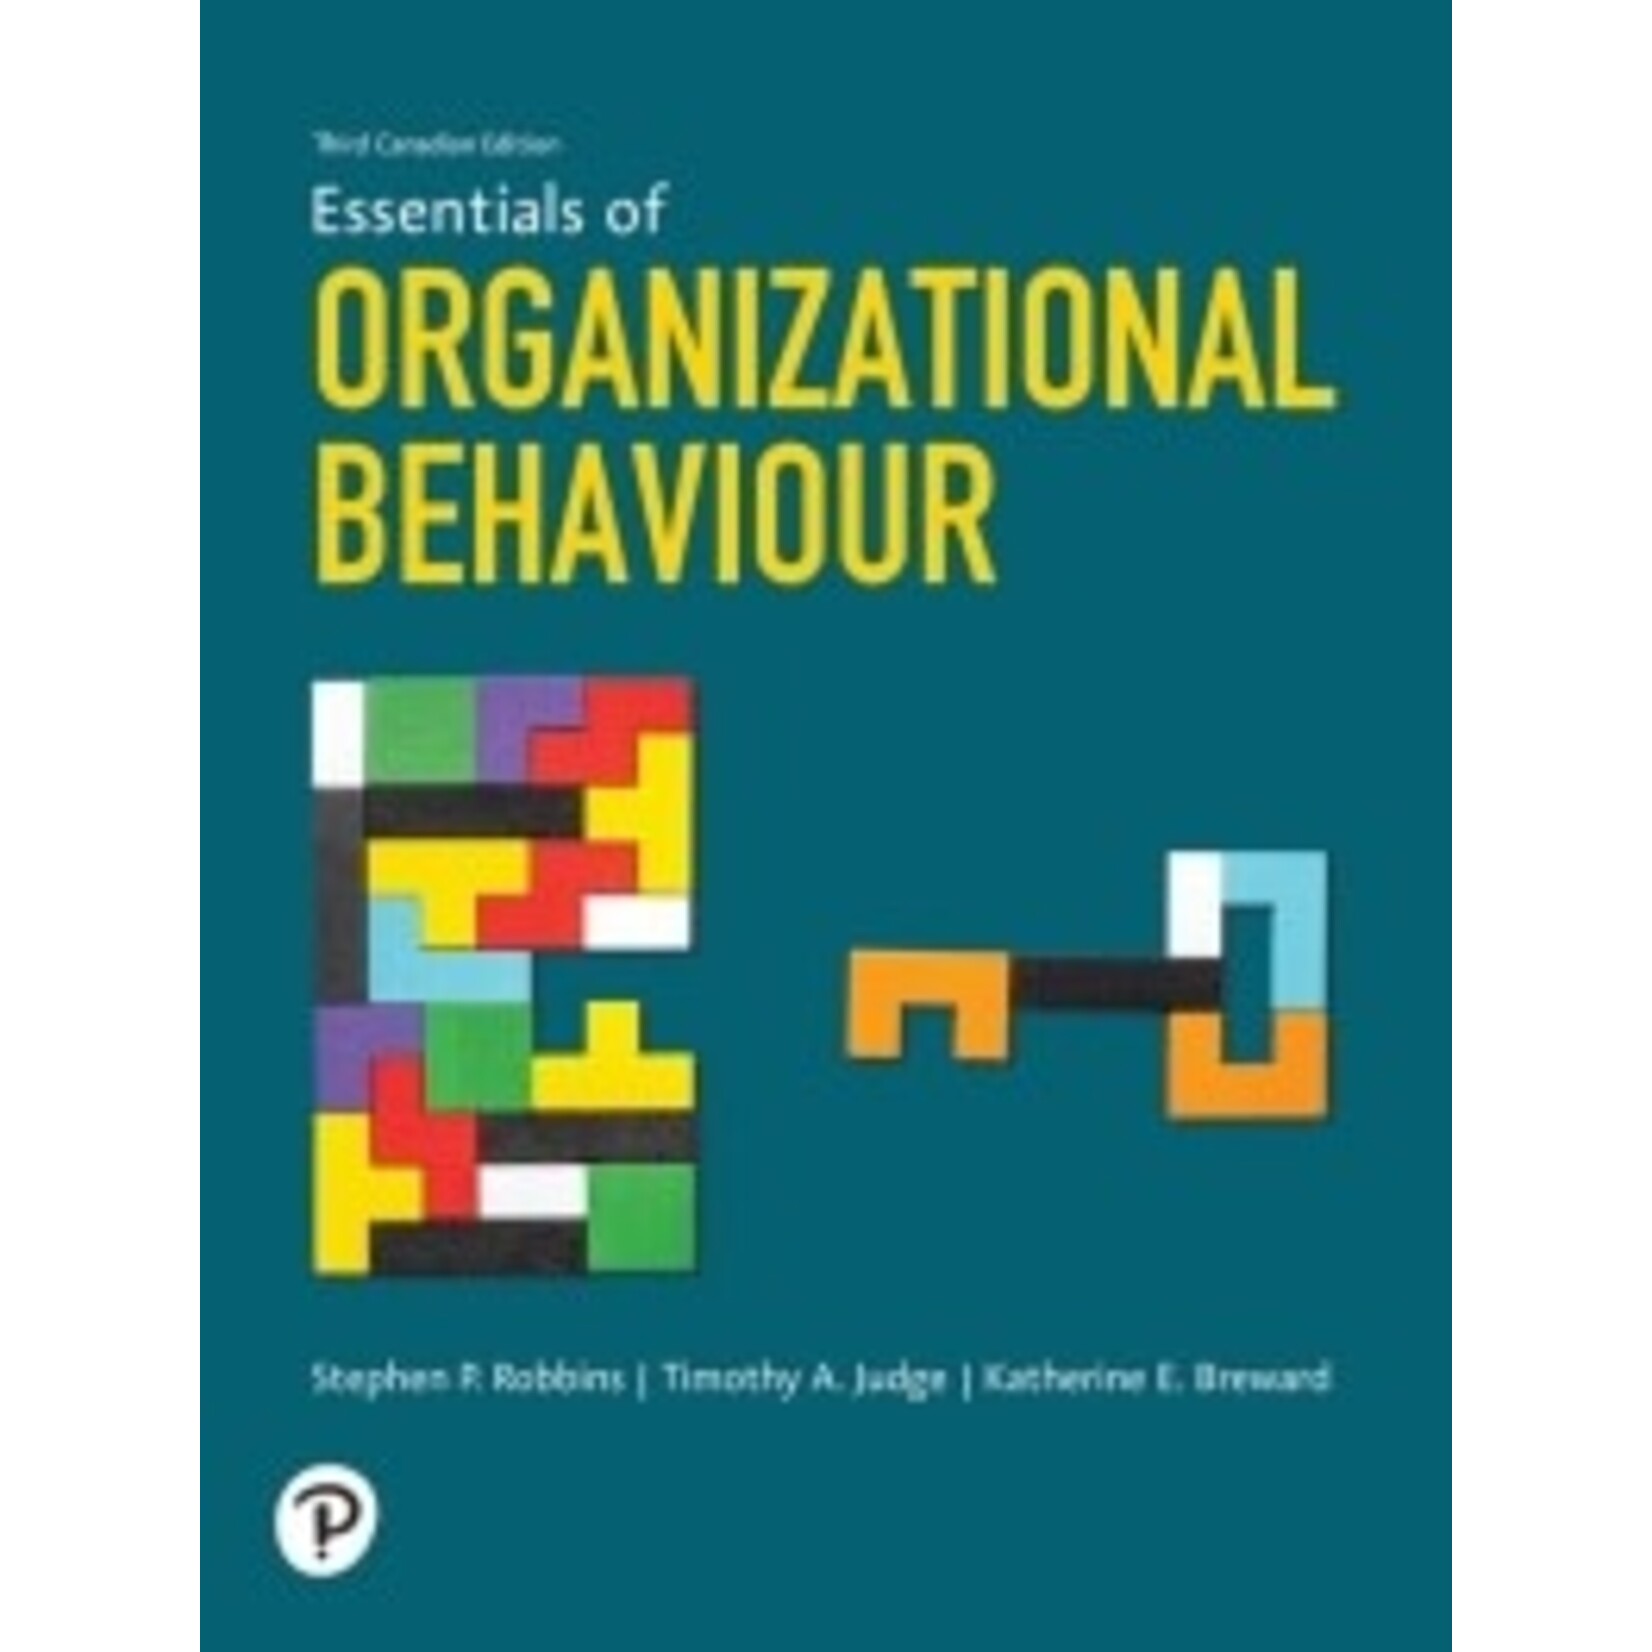 eBook Essentials of Organizational Behaviour, 3rd Canadian Edition (180 Days)